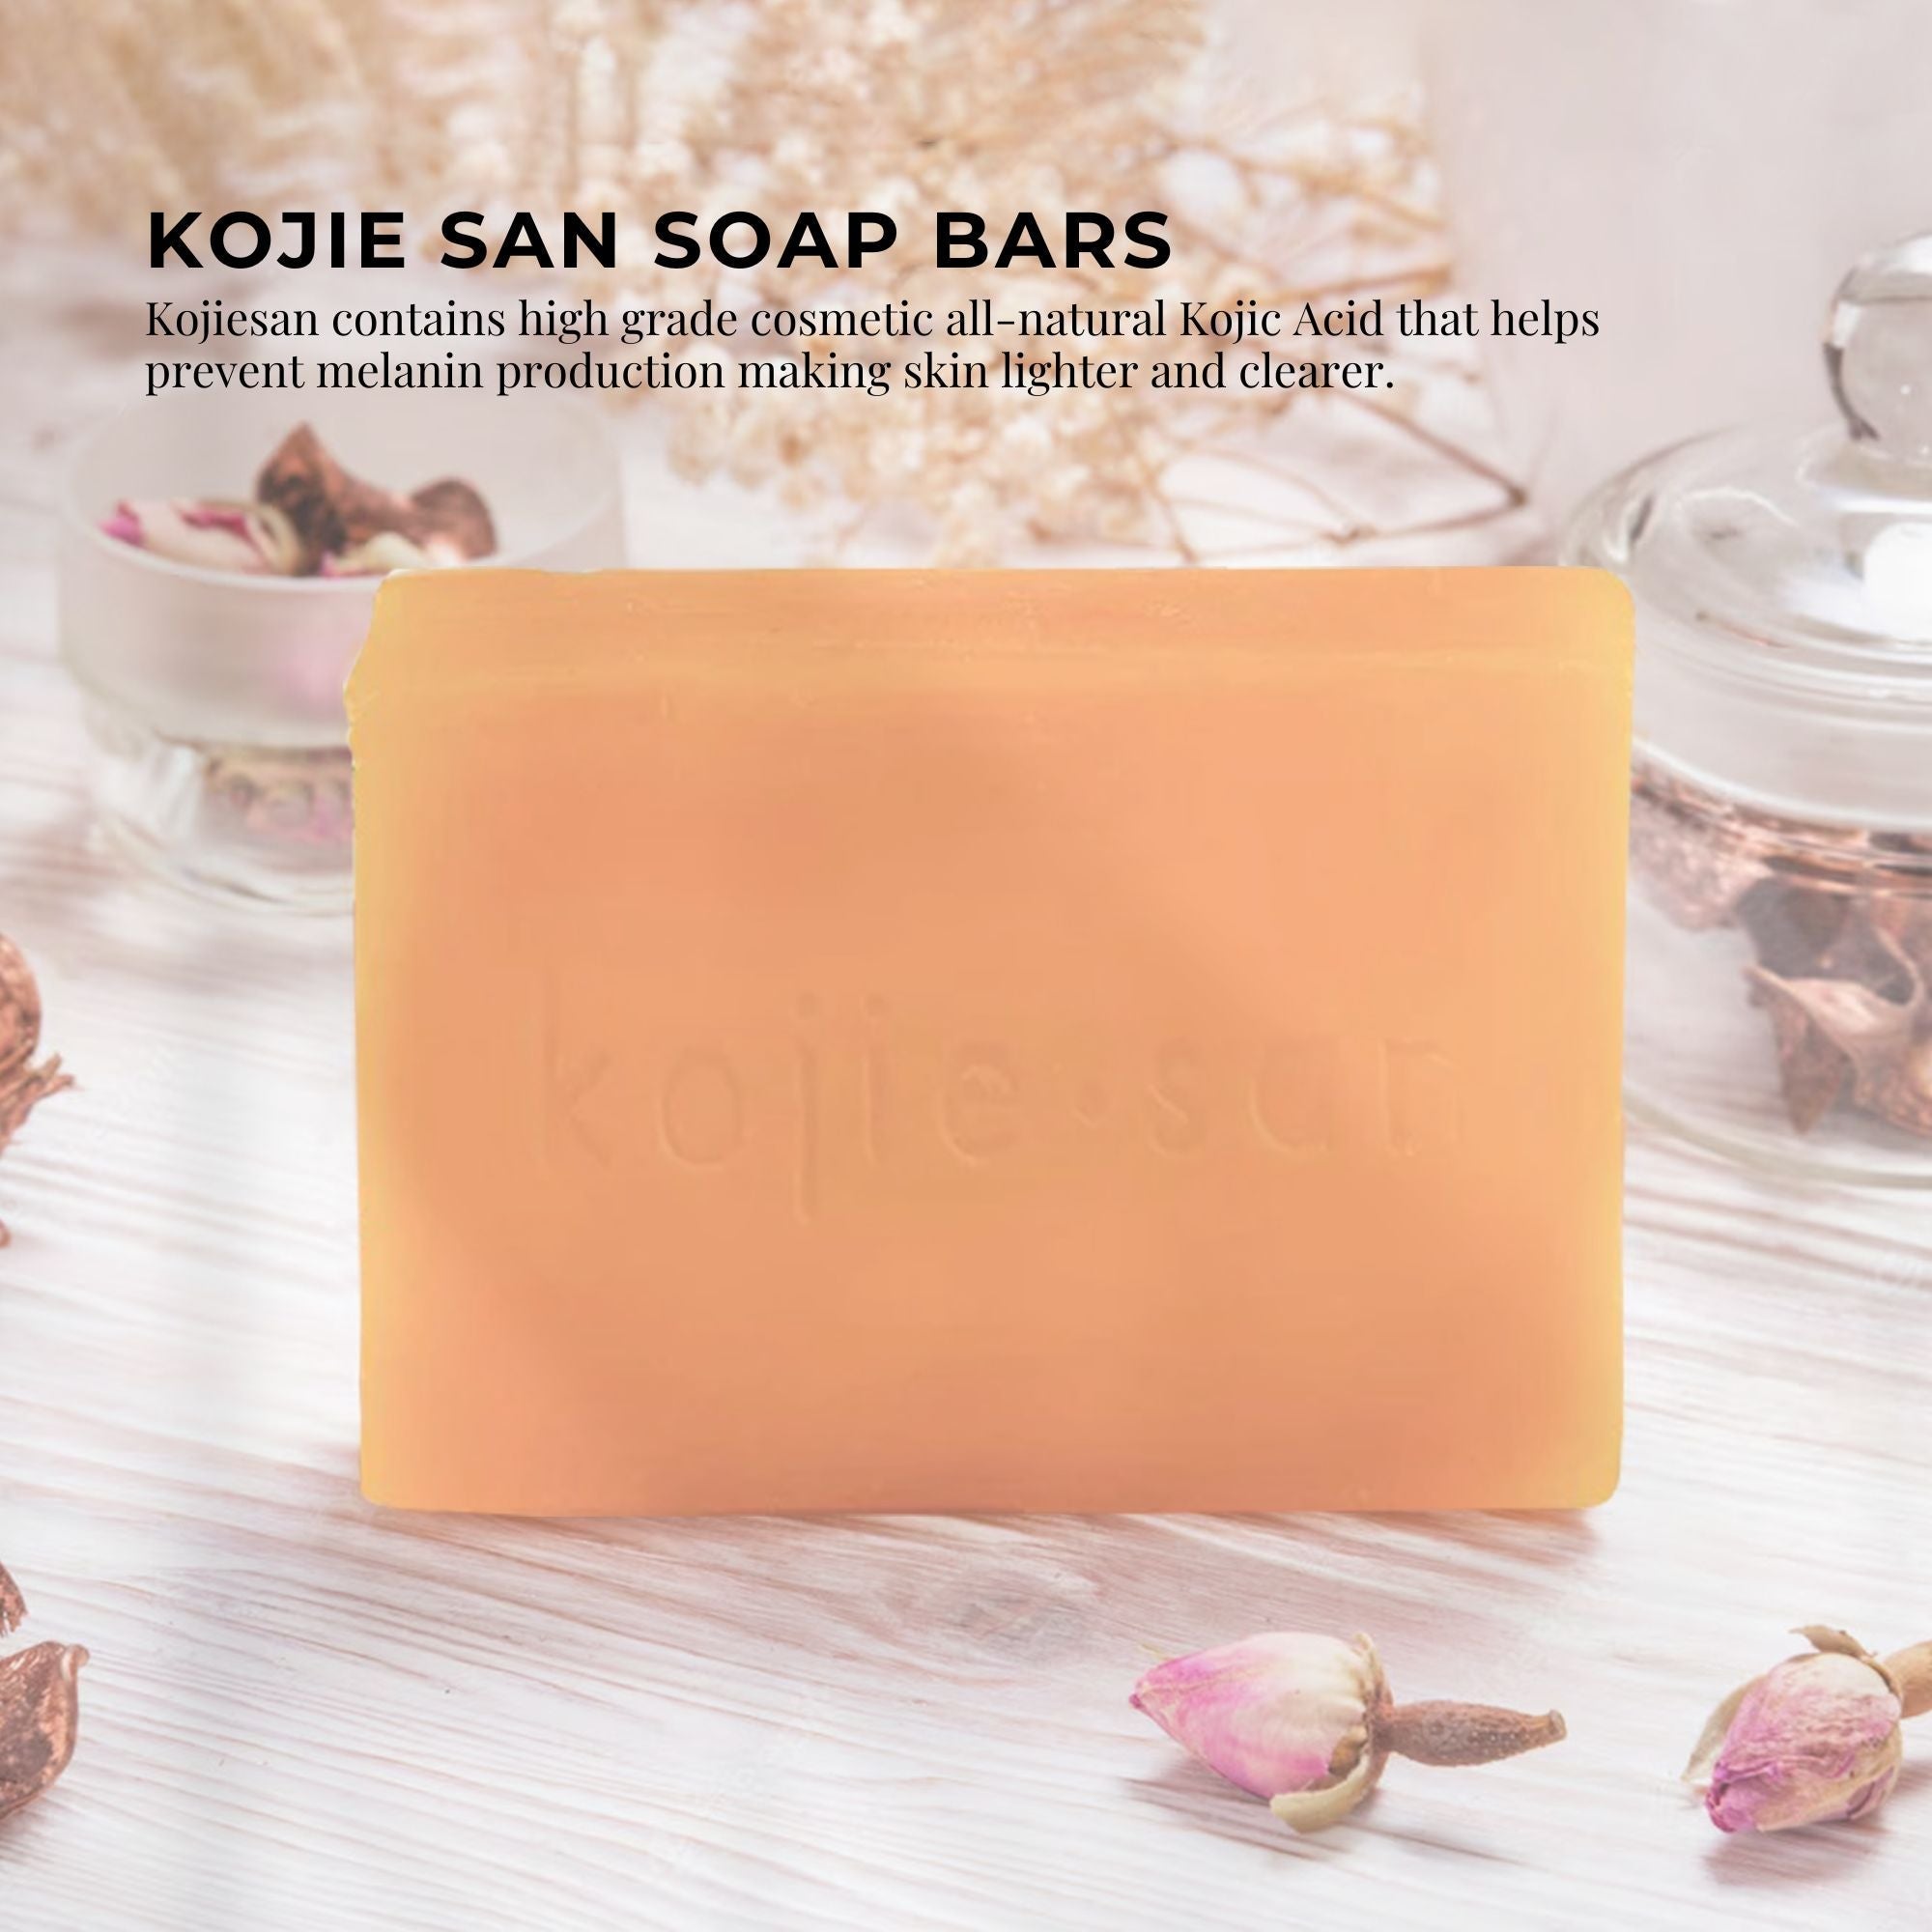 5x  Soap Bars - 135g Skin Lightening Kojic Acid Natural Original Bar